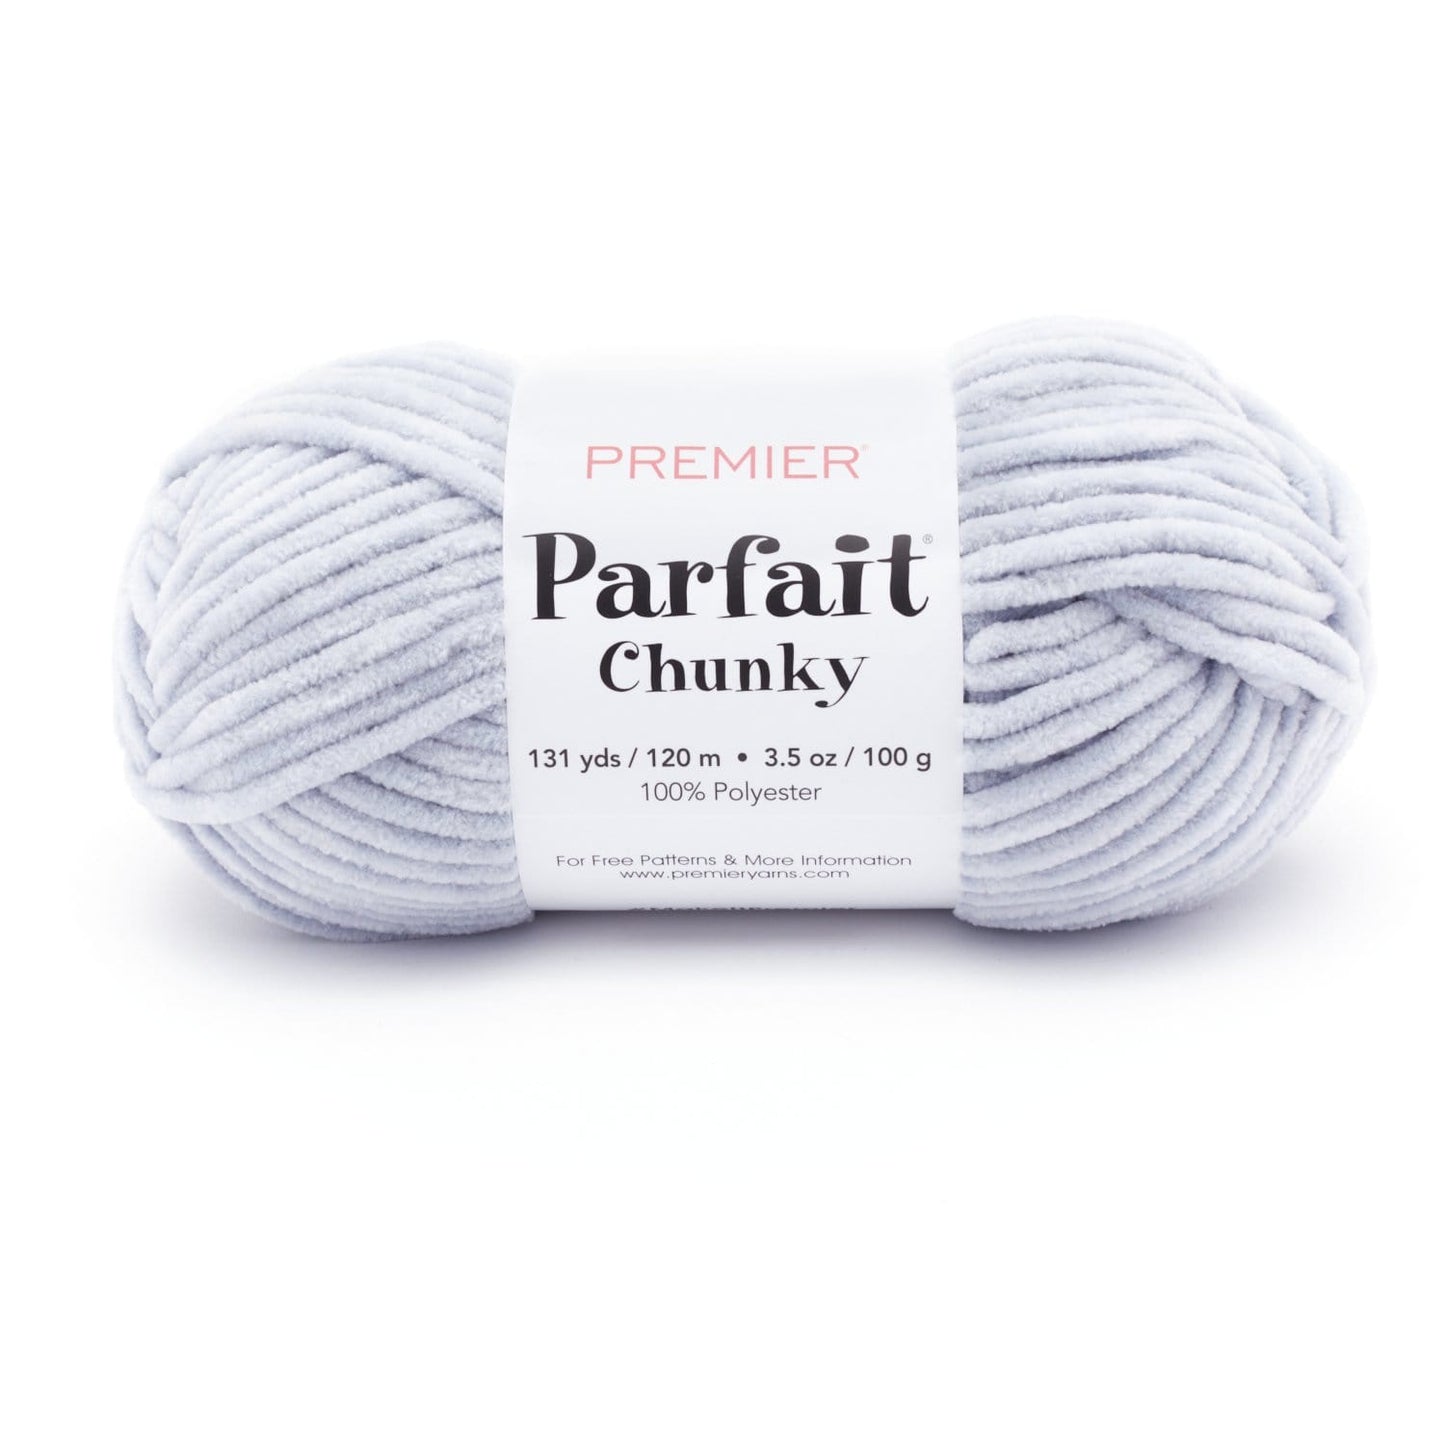 Premier Parfait Chunky Chenille yarn- Cloudy Day